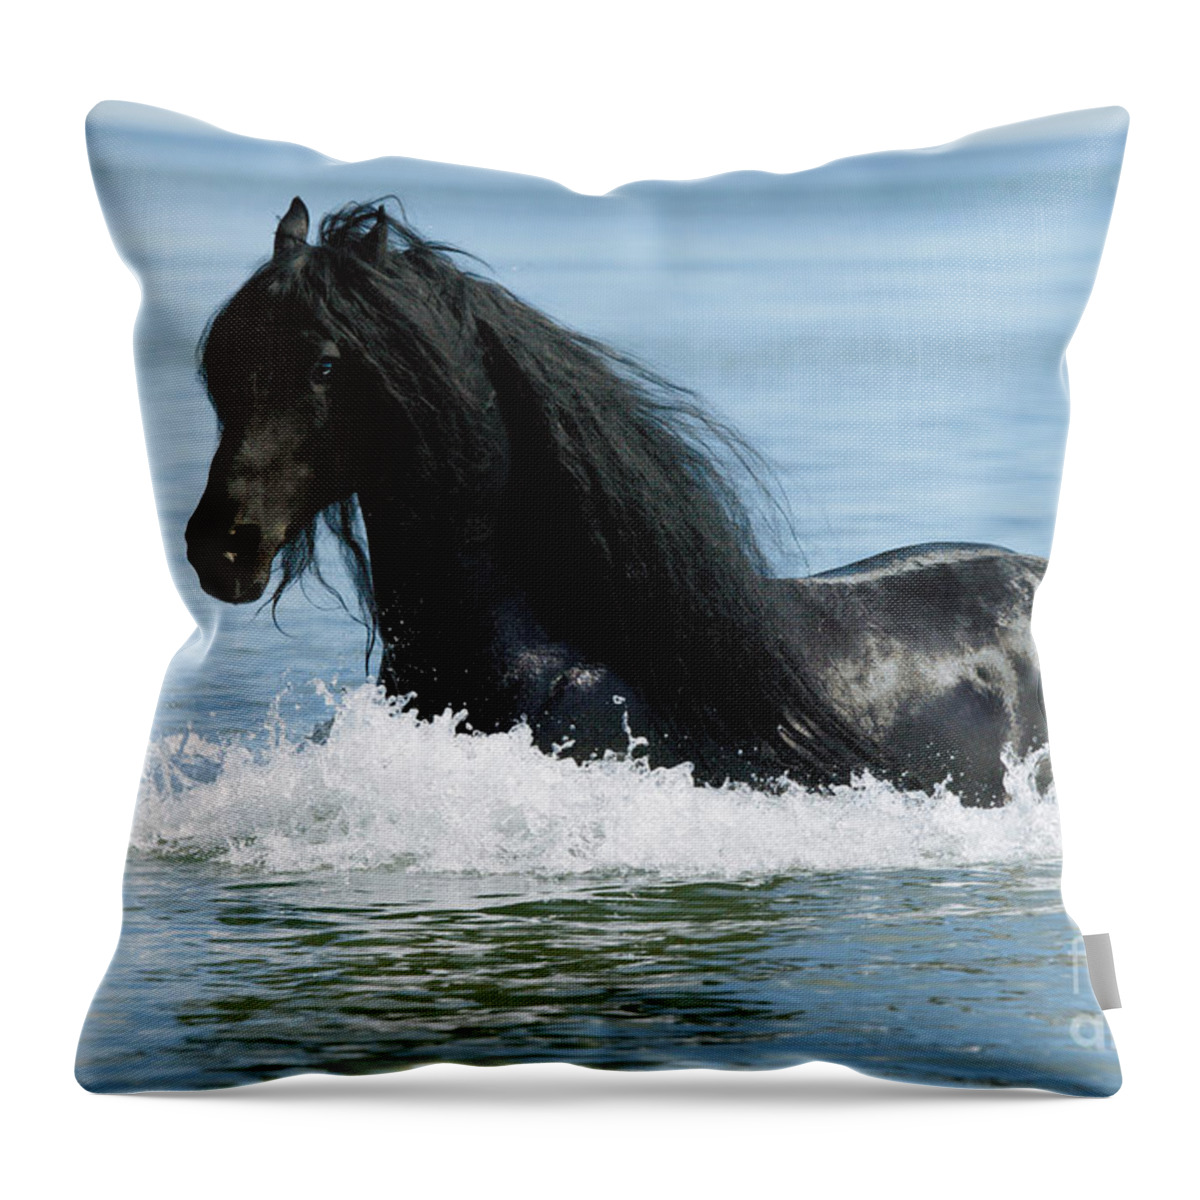 Friesian Throw Pillow featuring the photograph Friesian Horse by Gabriele Boiselle